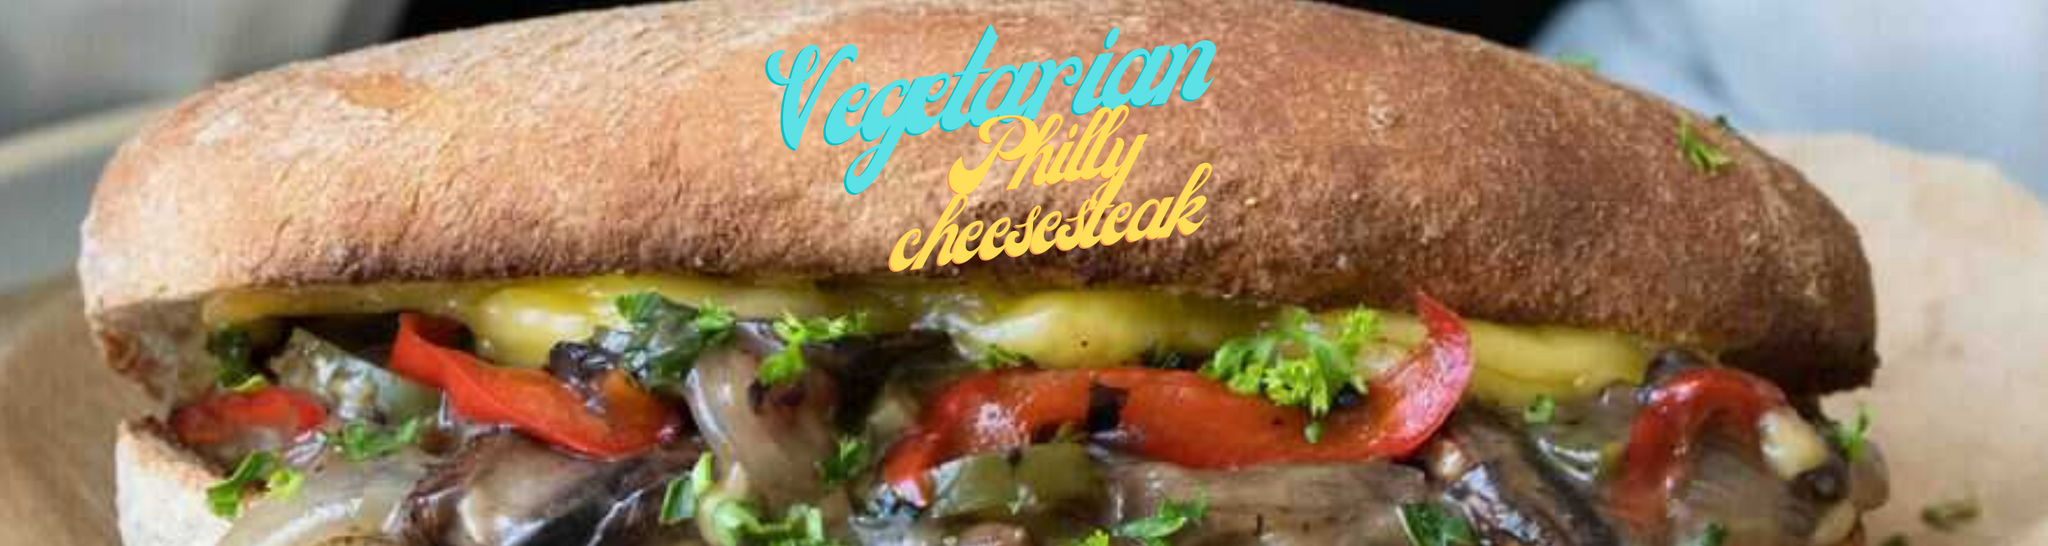 Vegetarian Philly cheesesteak